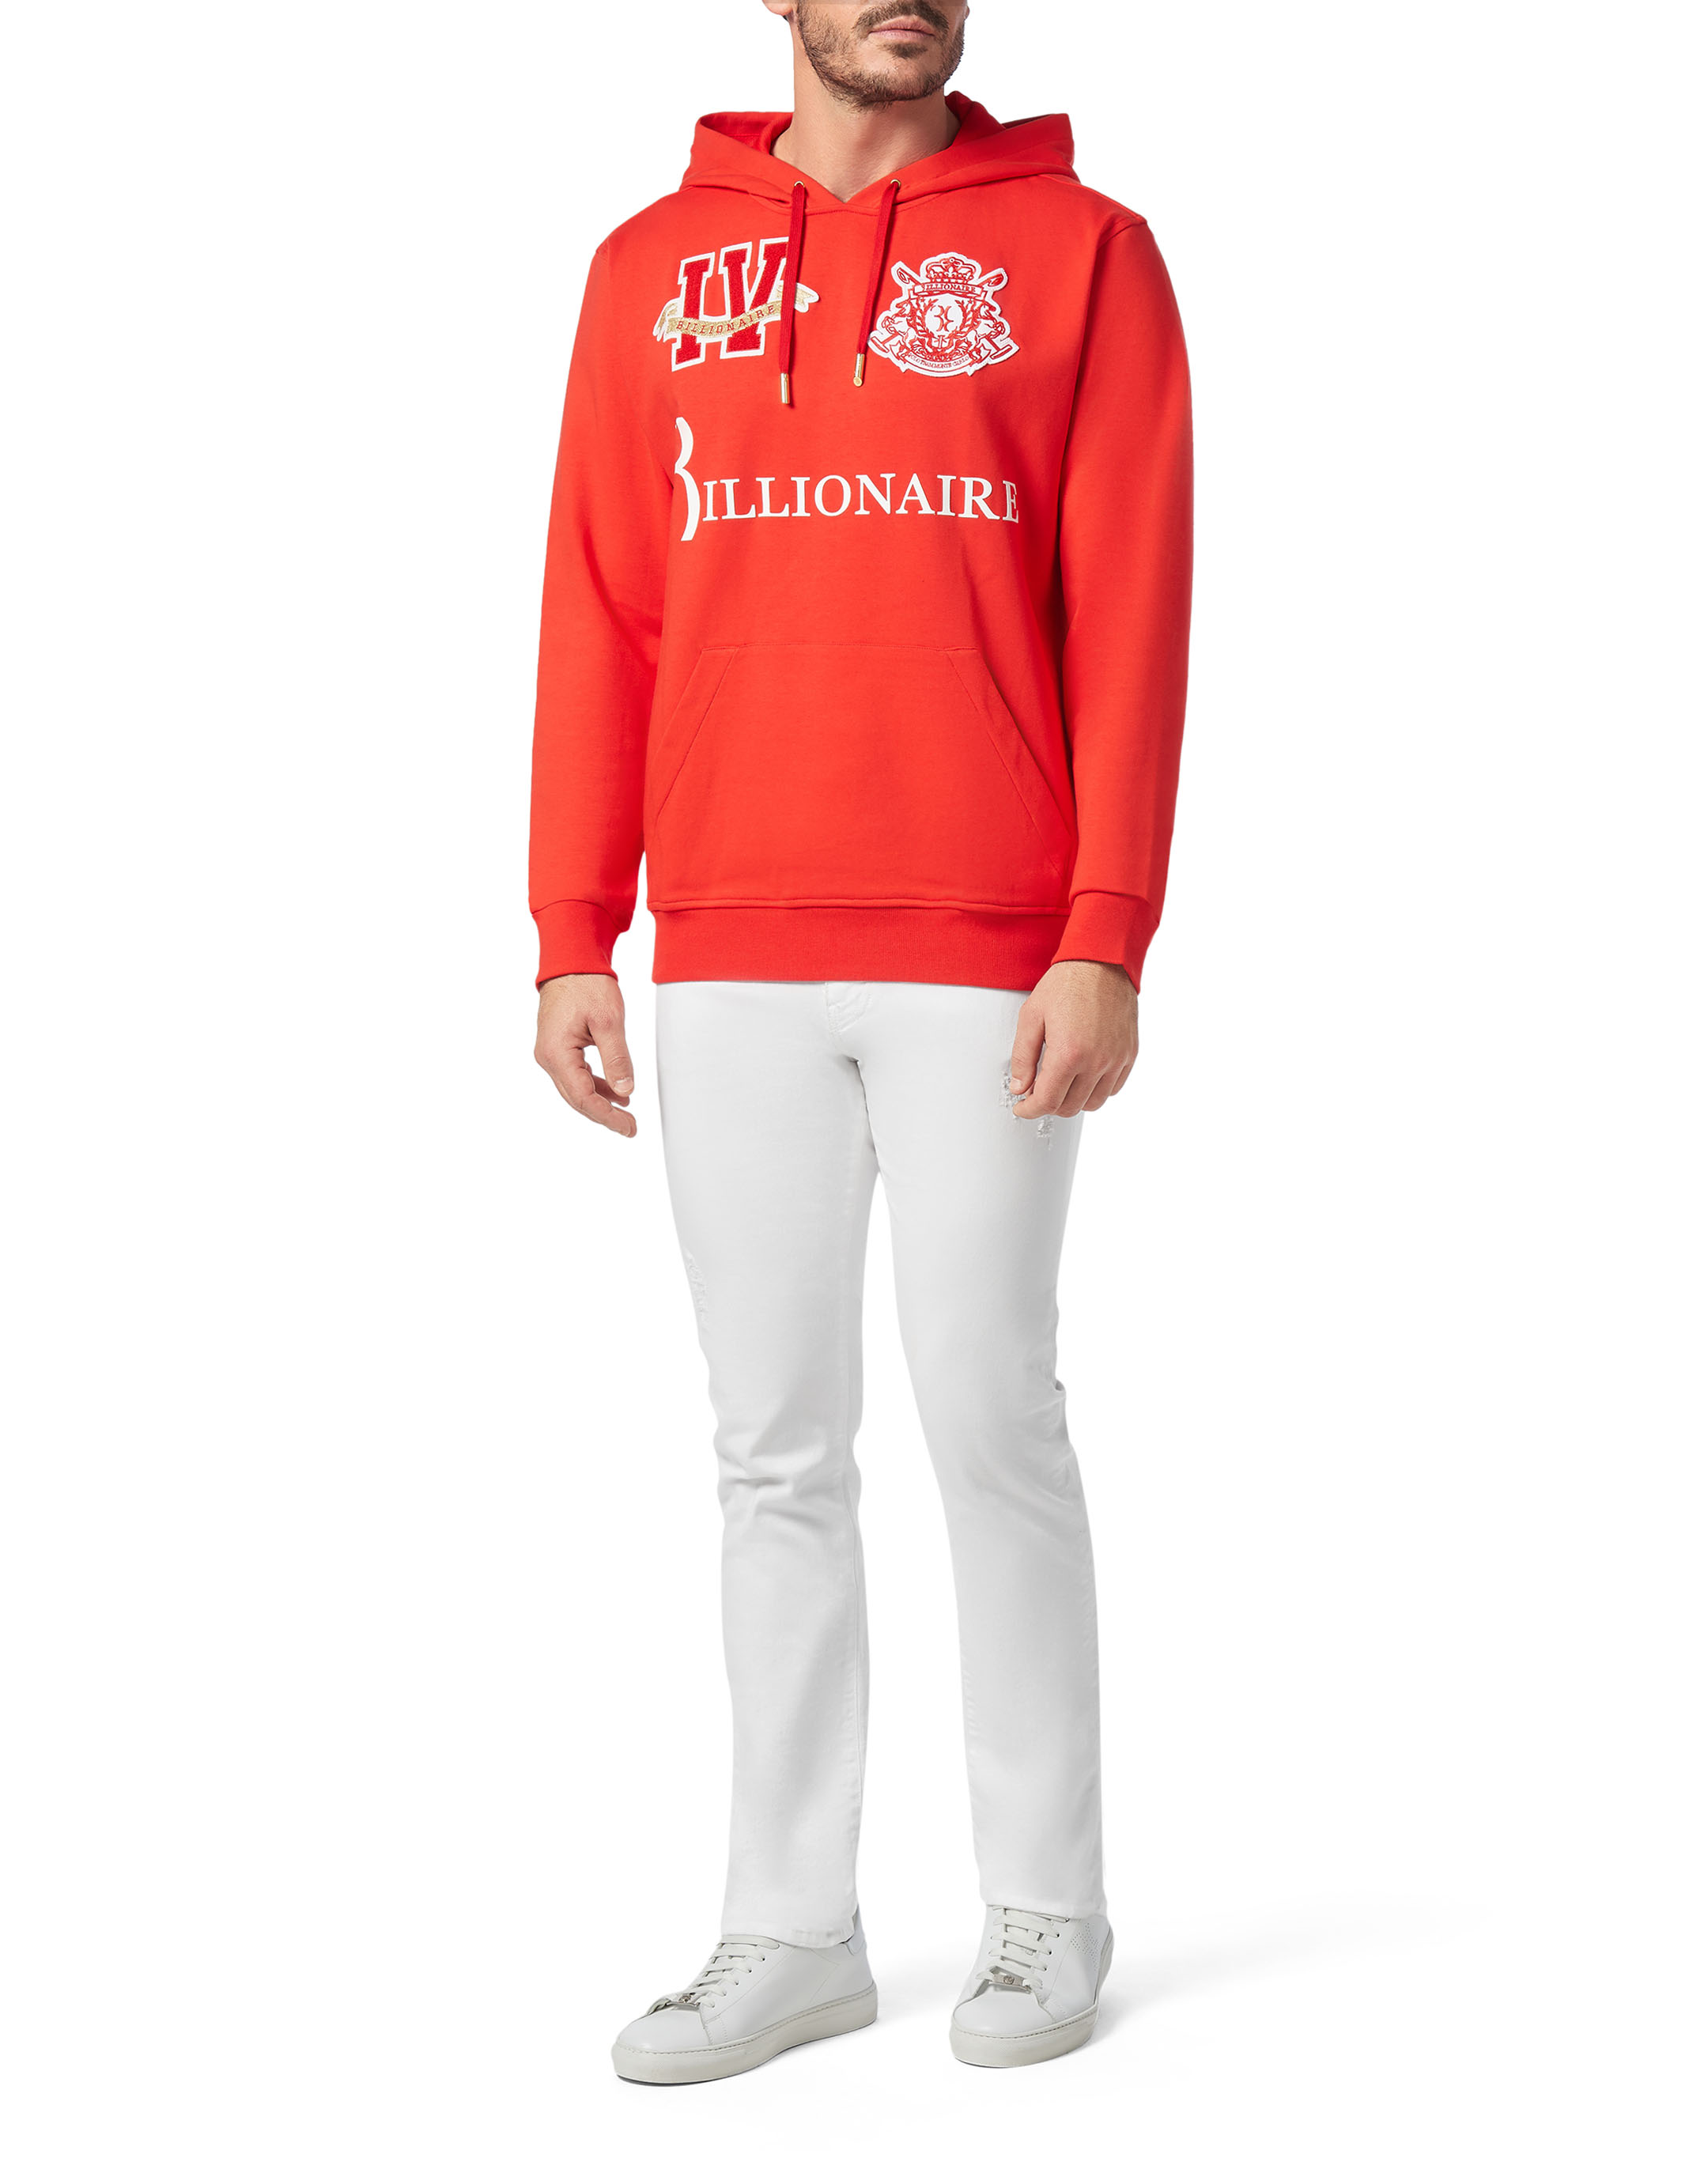 Billionaire Hoodie sweatshirt Polo Team Montecarlo